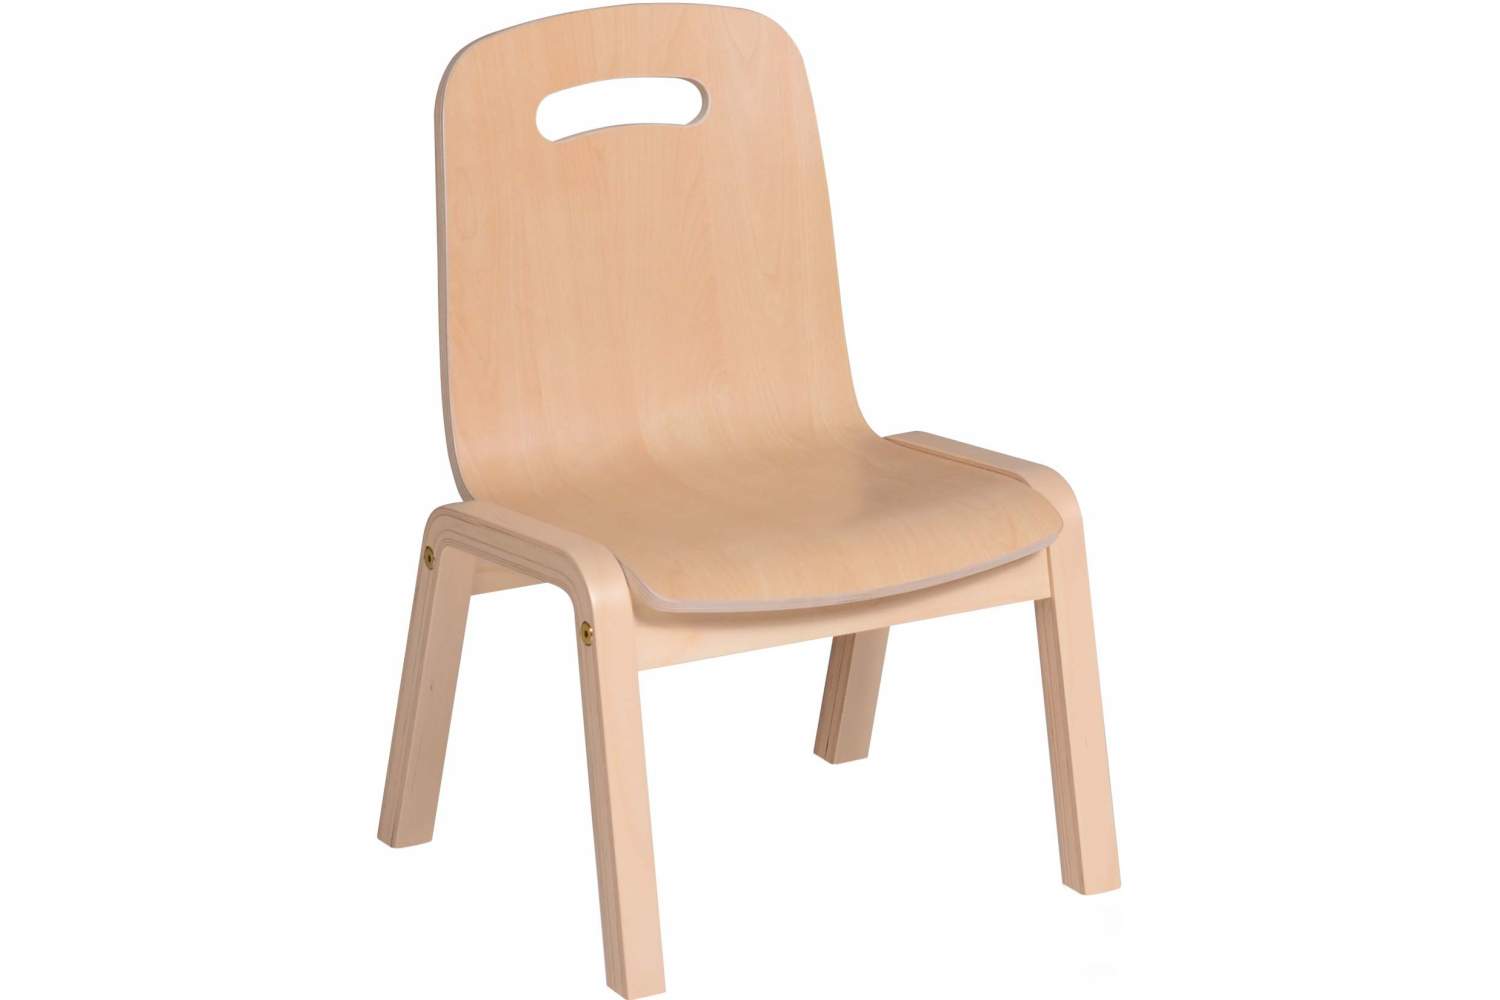  Starship Chair - Scandinavian Birch Ply